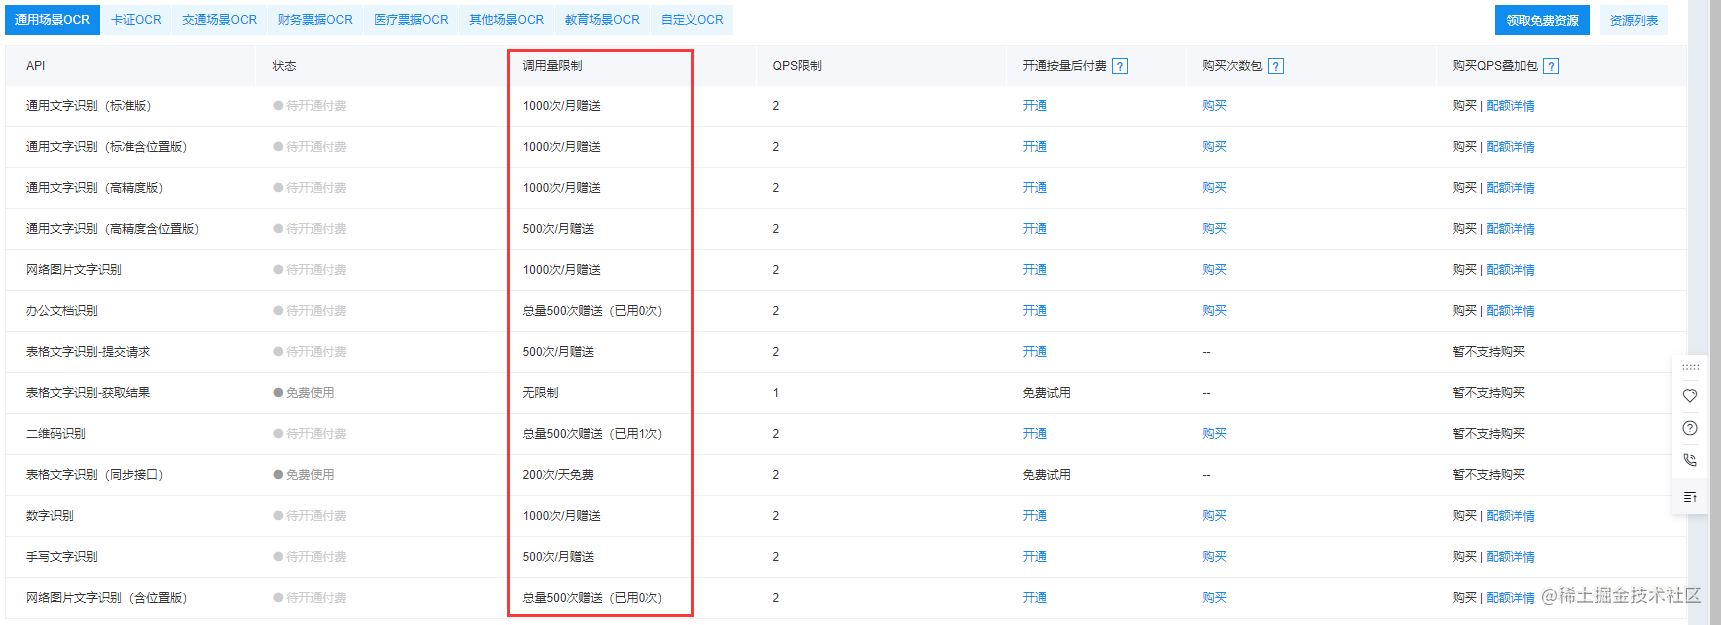 Baidu OCR interface fee details